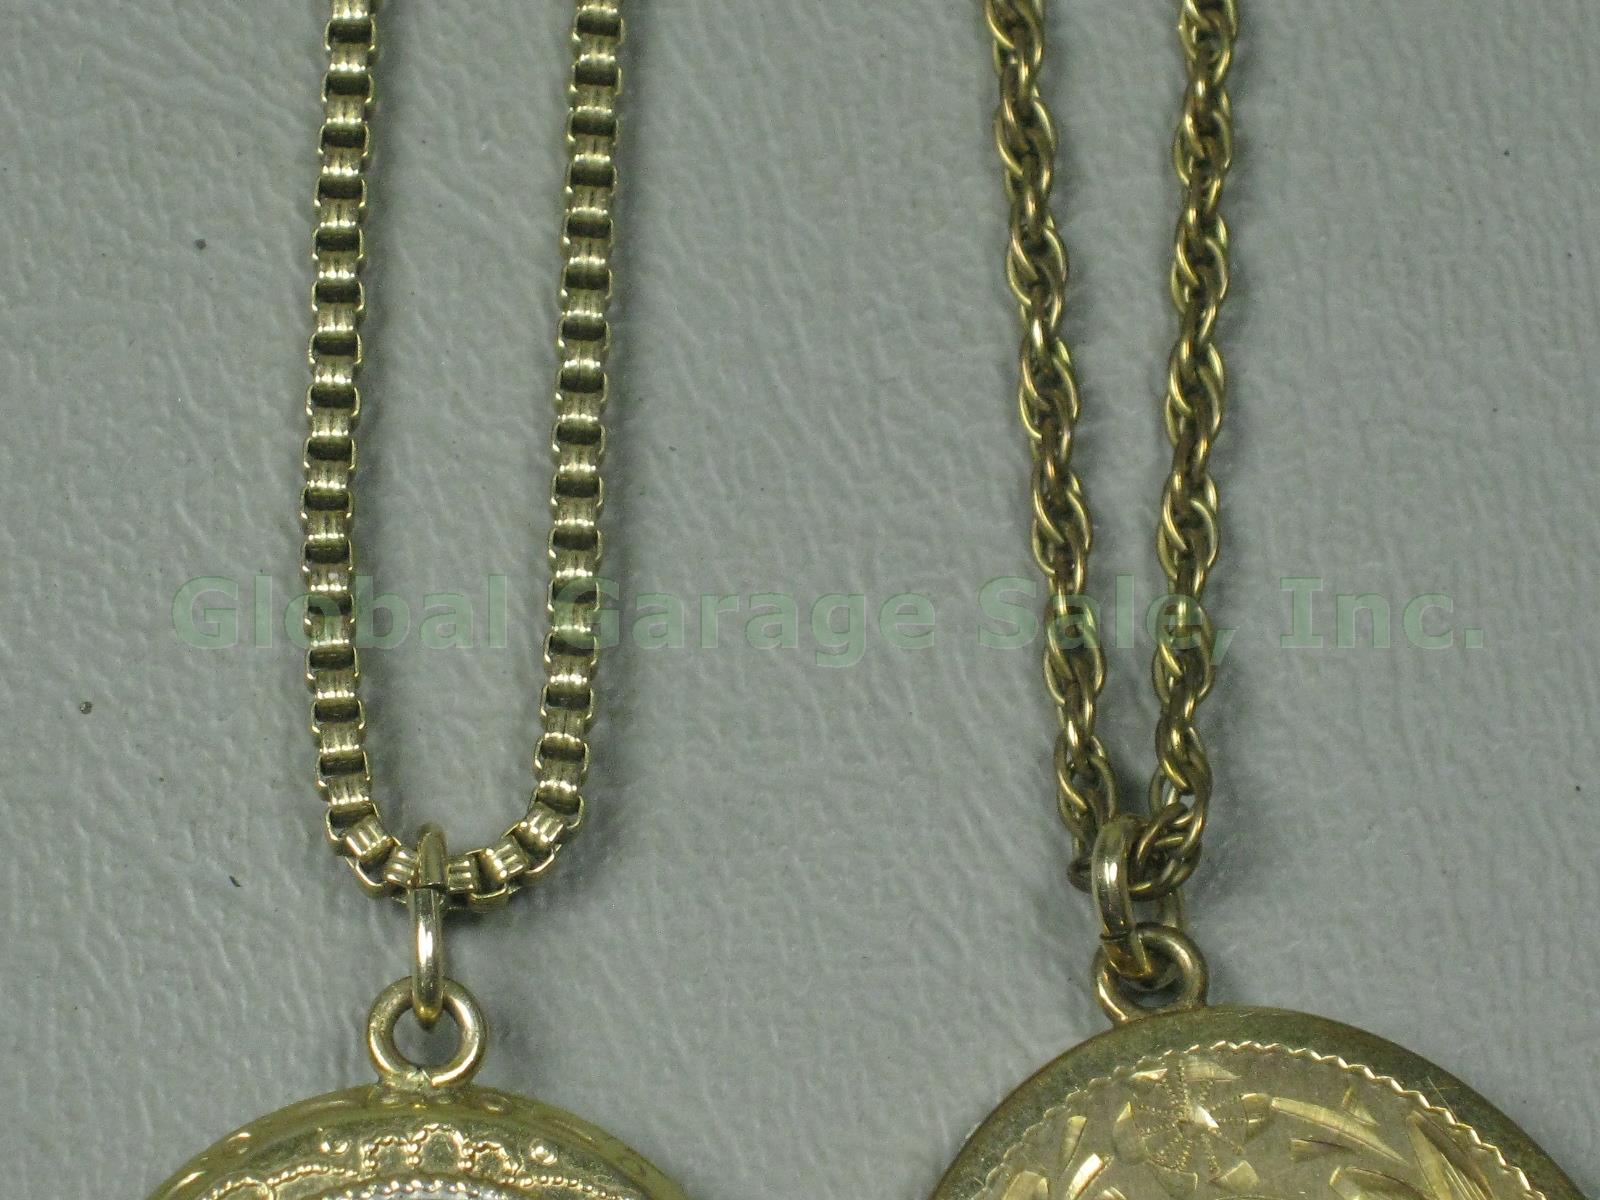 4 Vintage Antique Photo Lockets Garnet Opal Etched Necklace Pendants Jewelry Lot 14